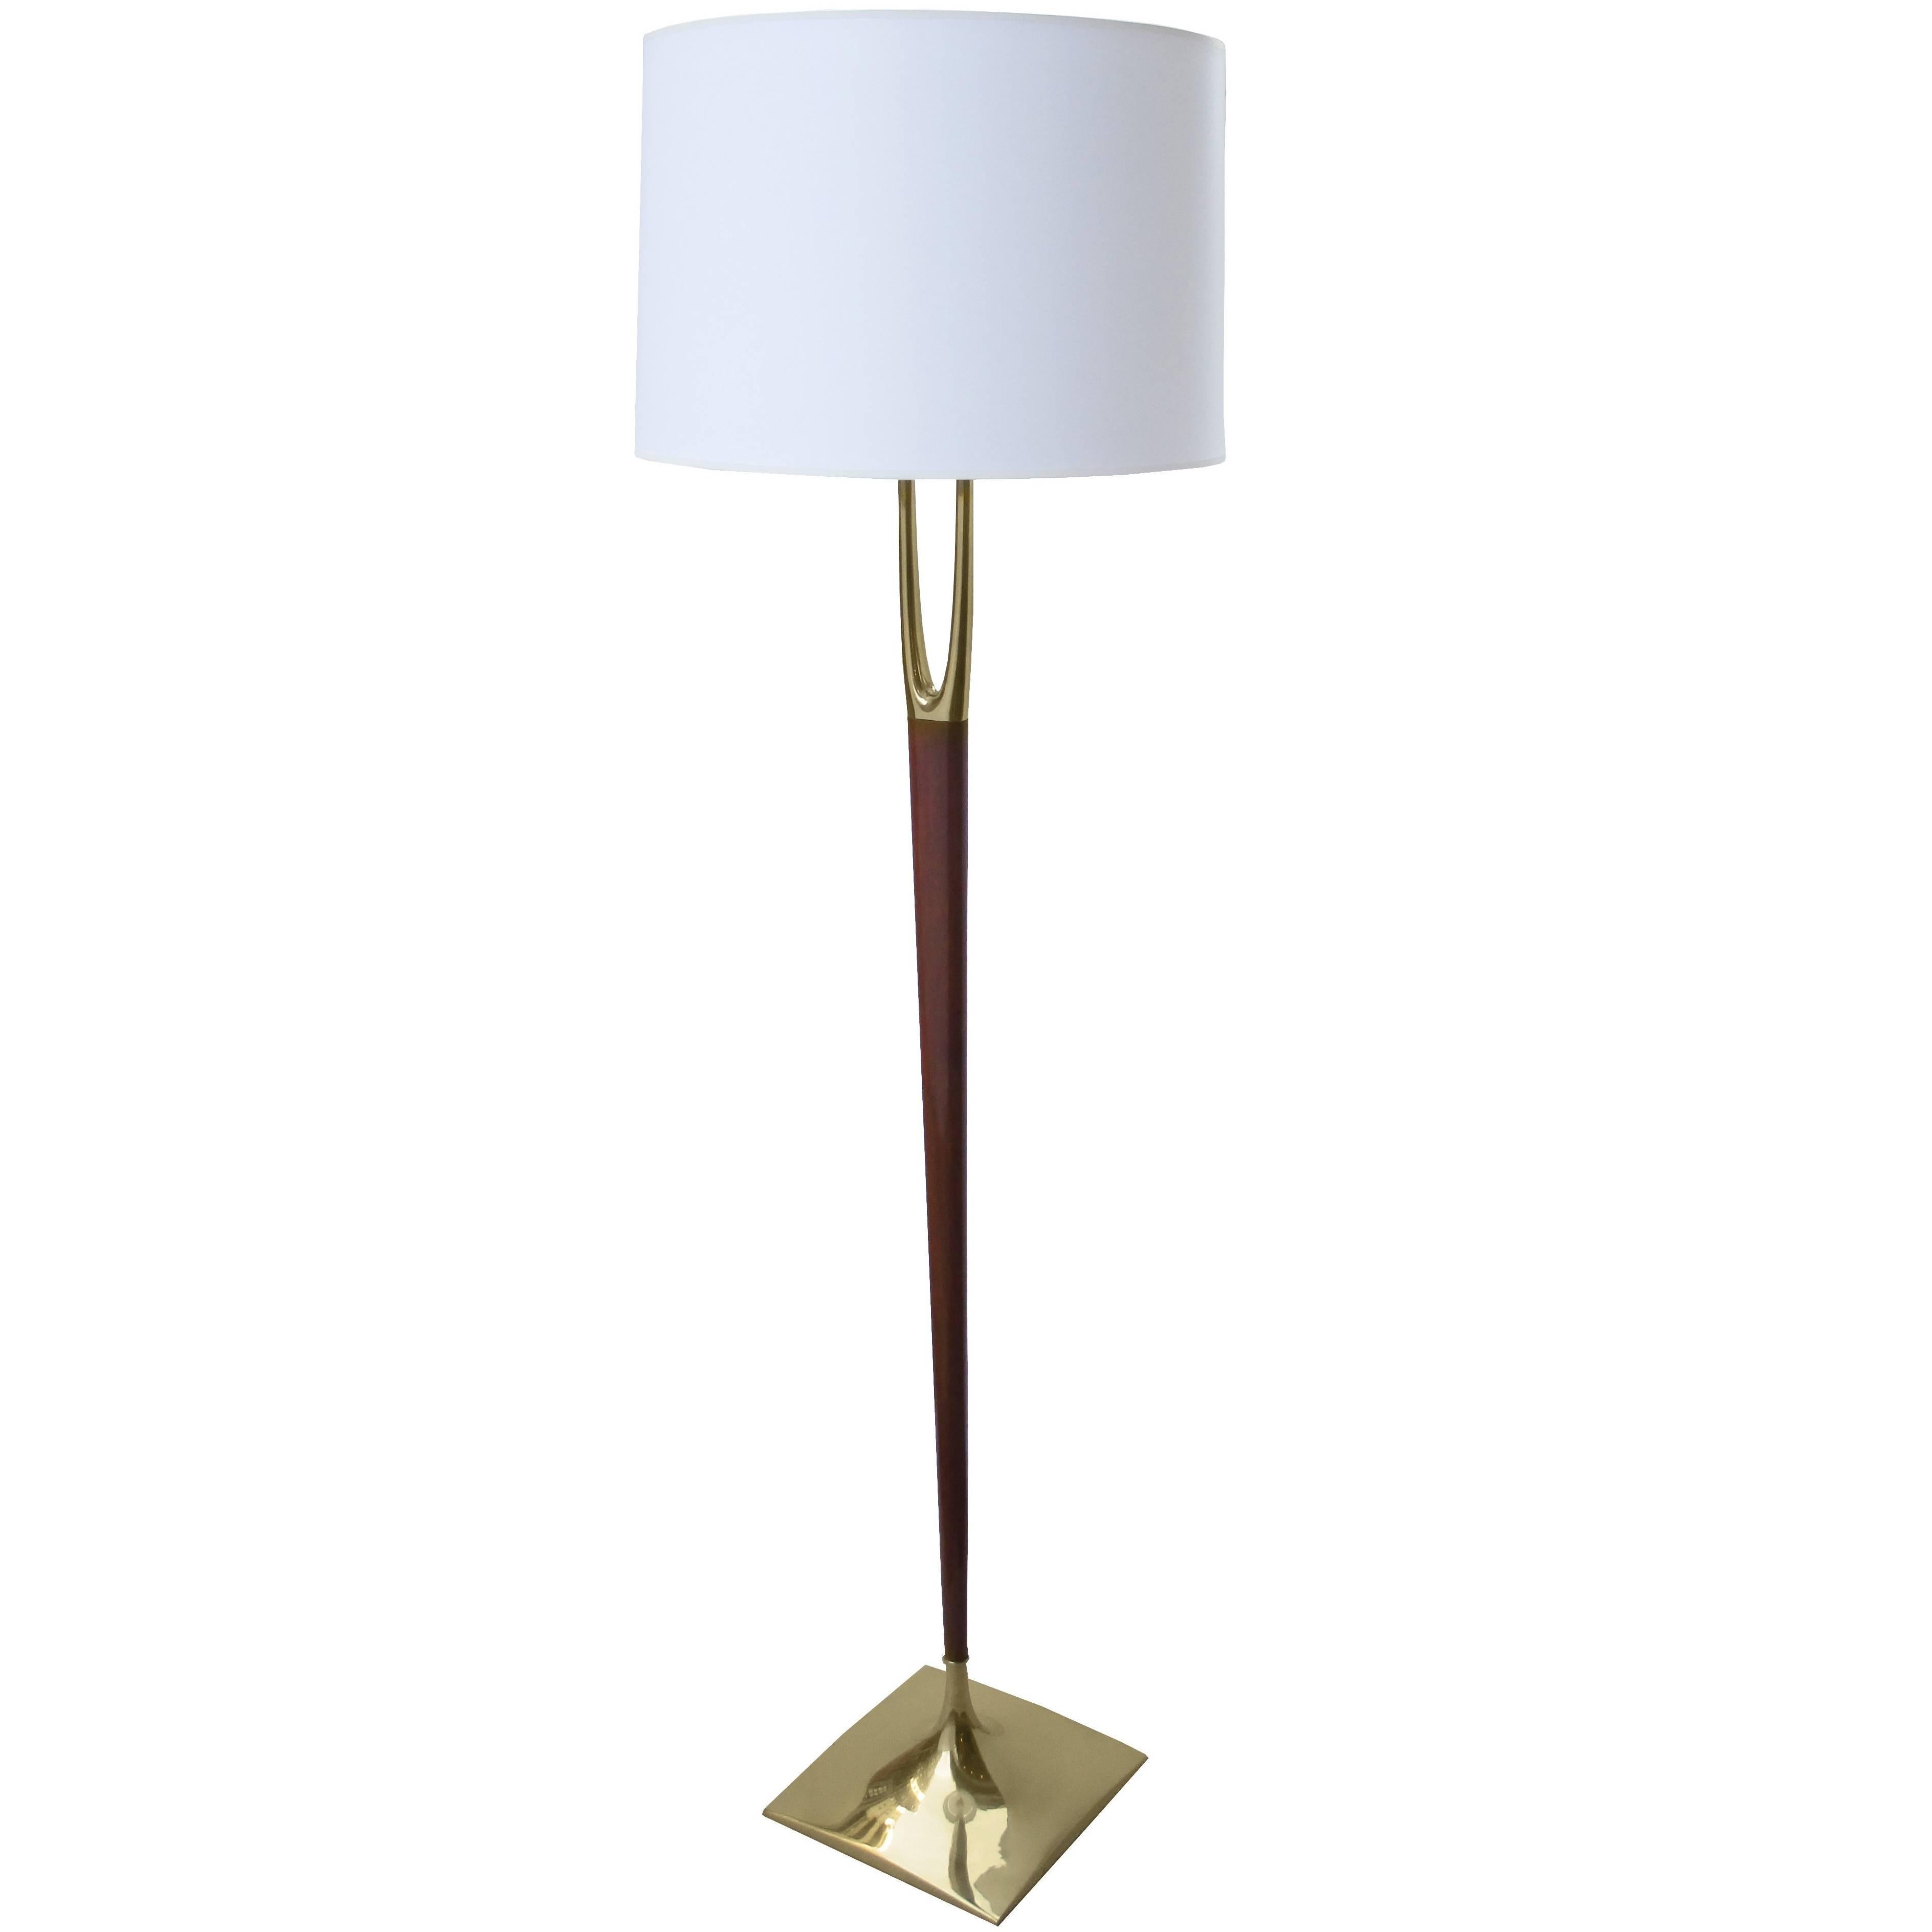 Gerald Thurston Midcentury Modernist Wishbone Floor Lamp